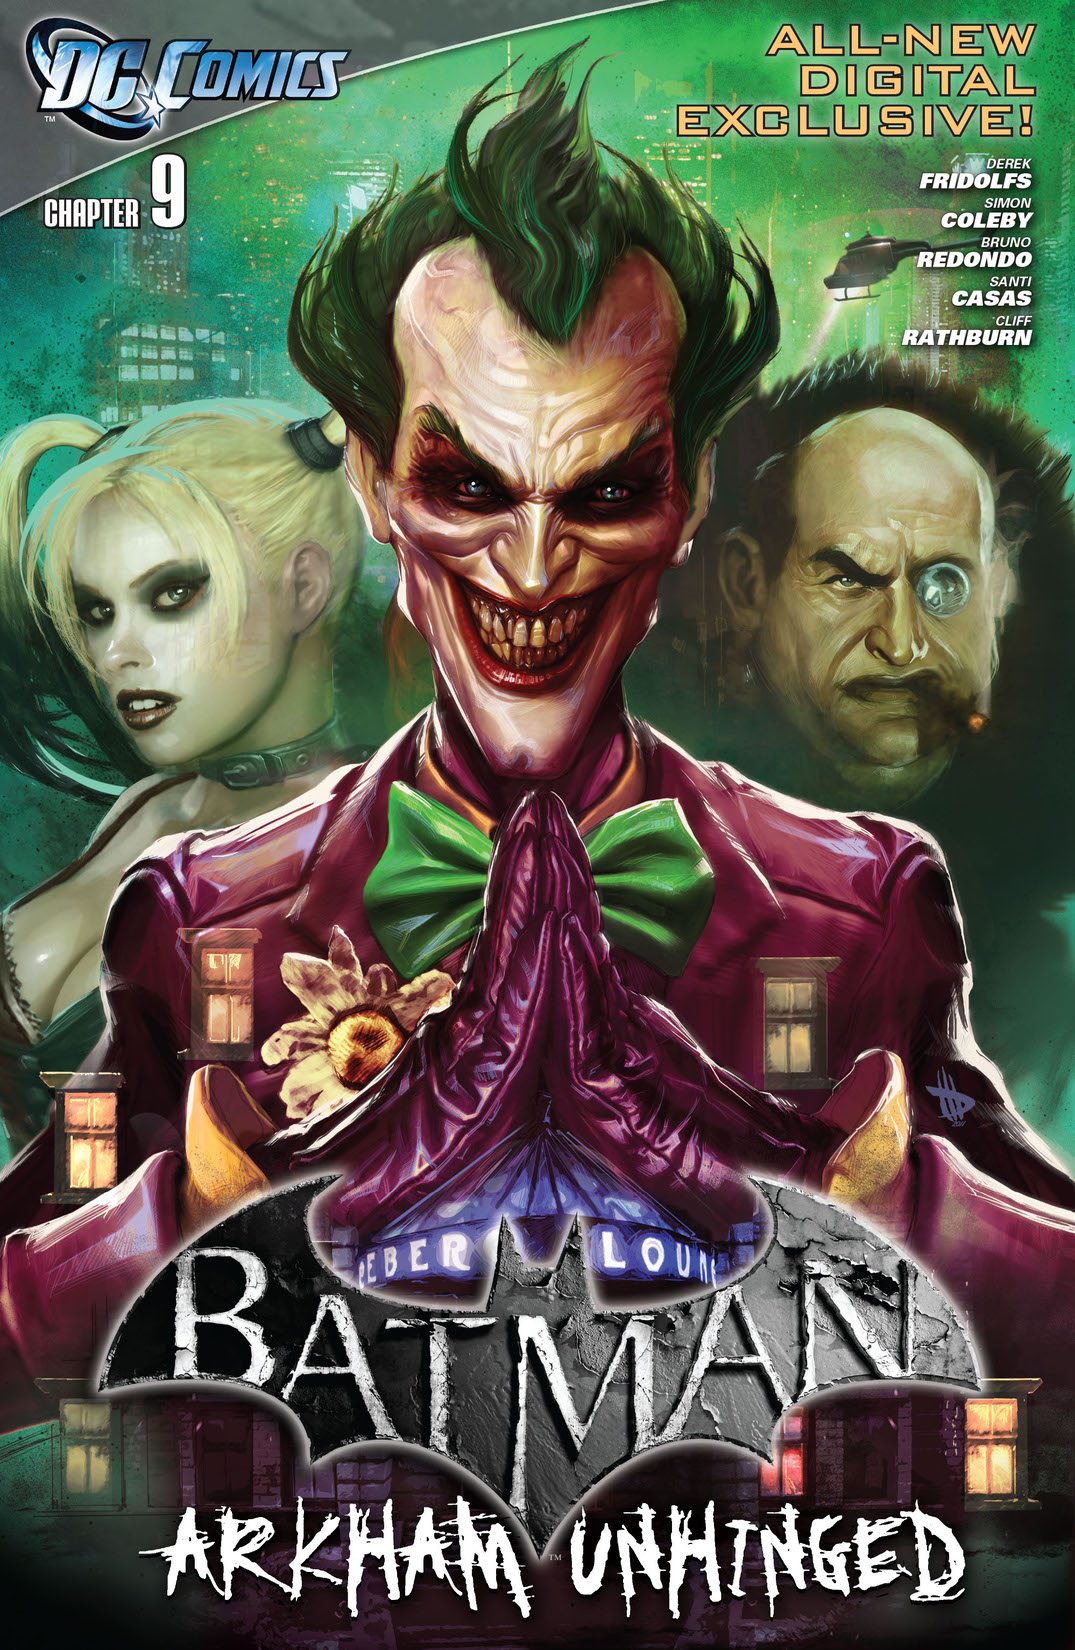 Batman: Arkham Unhinged #9 preview images